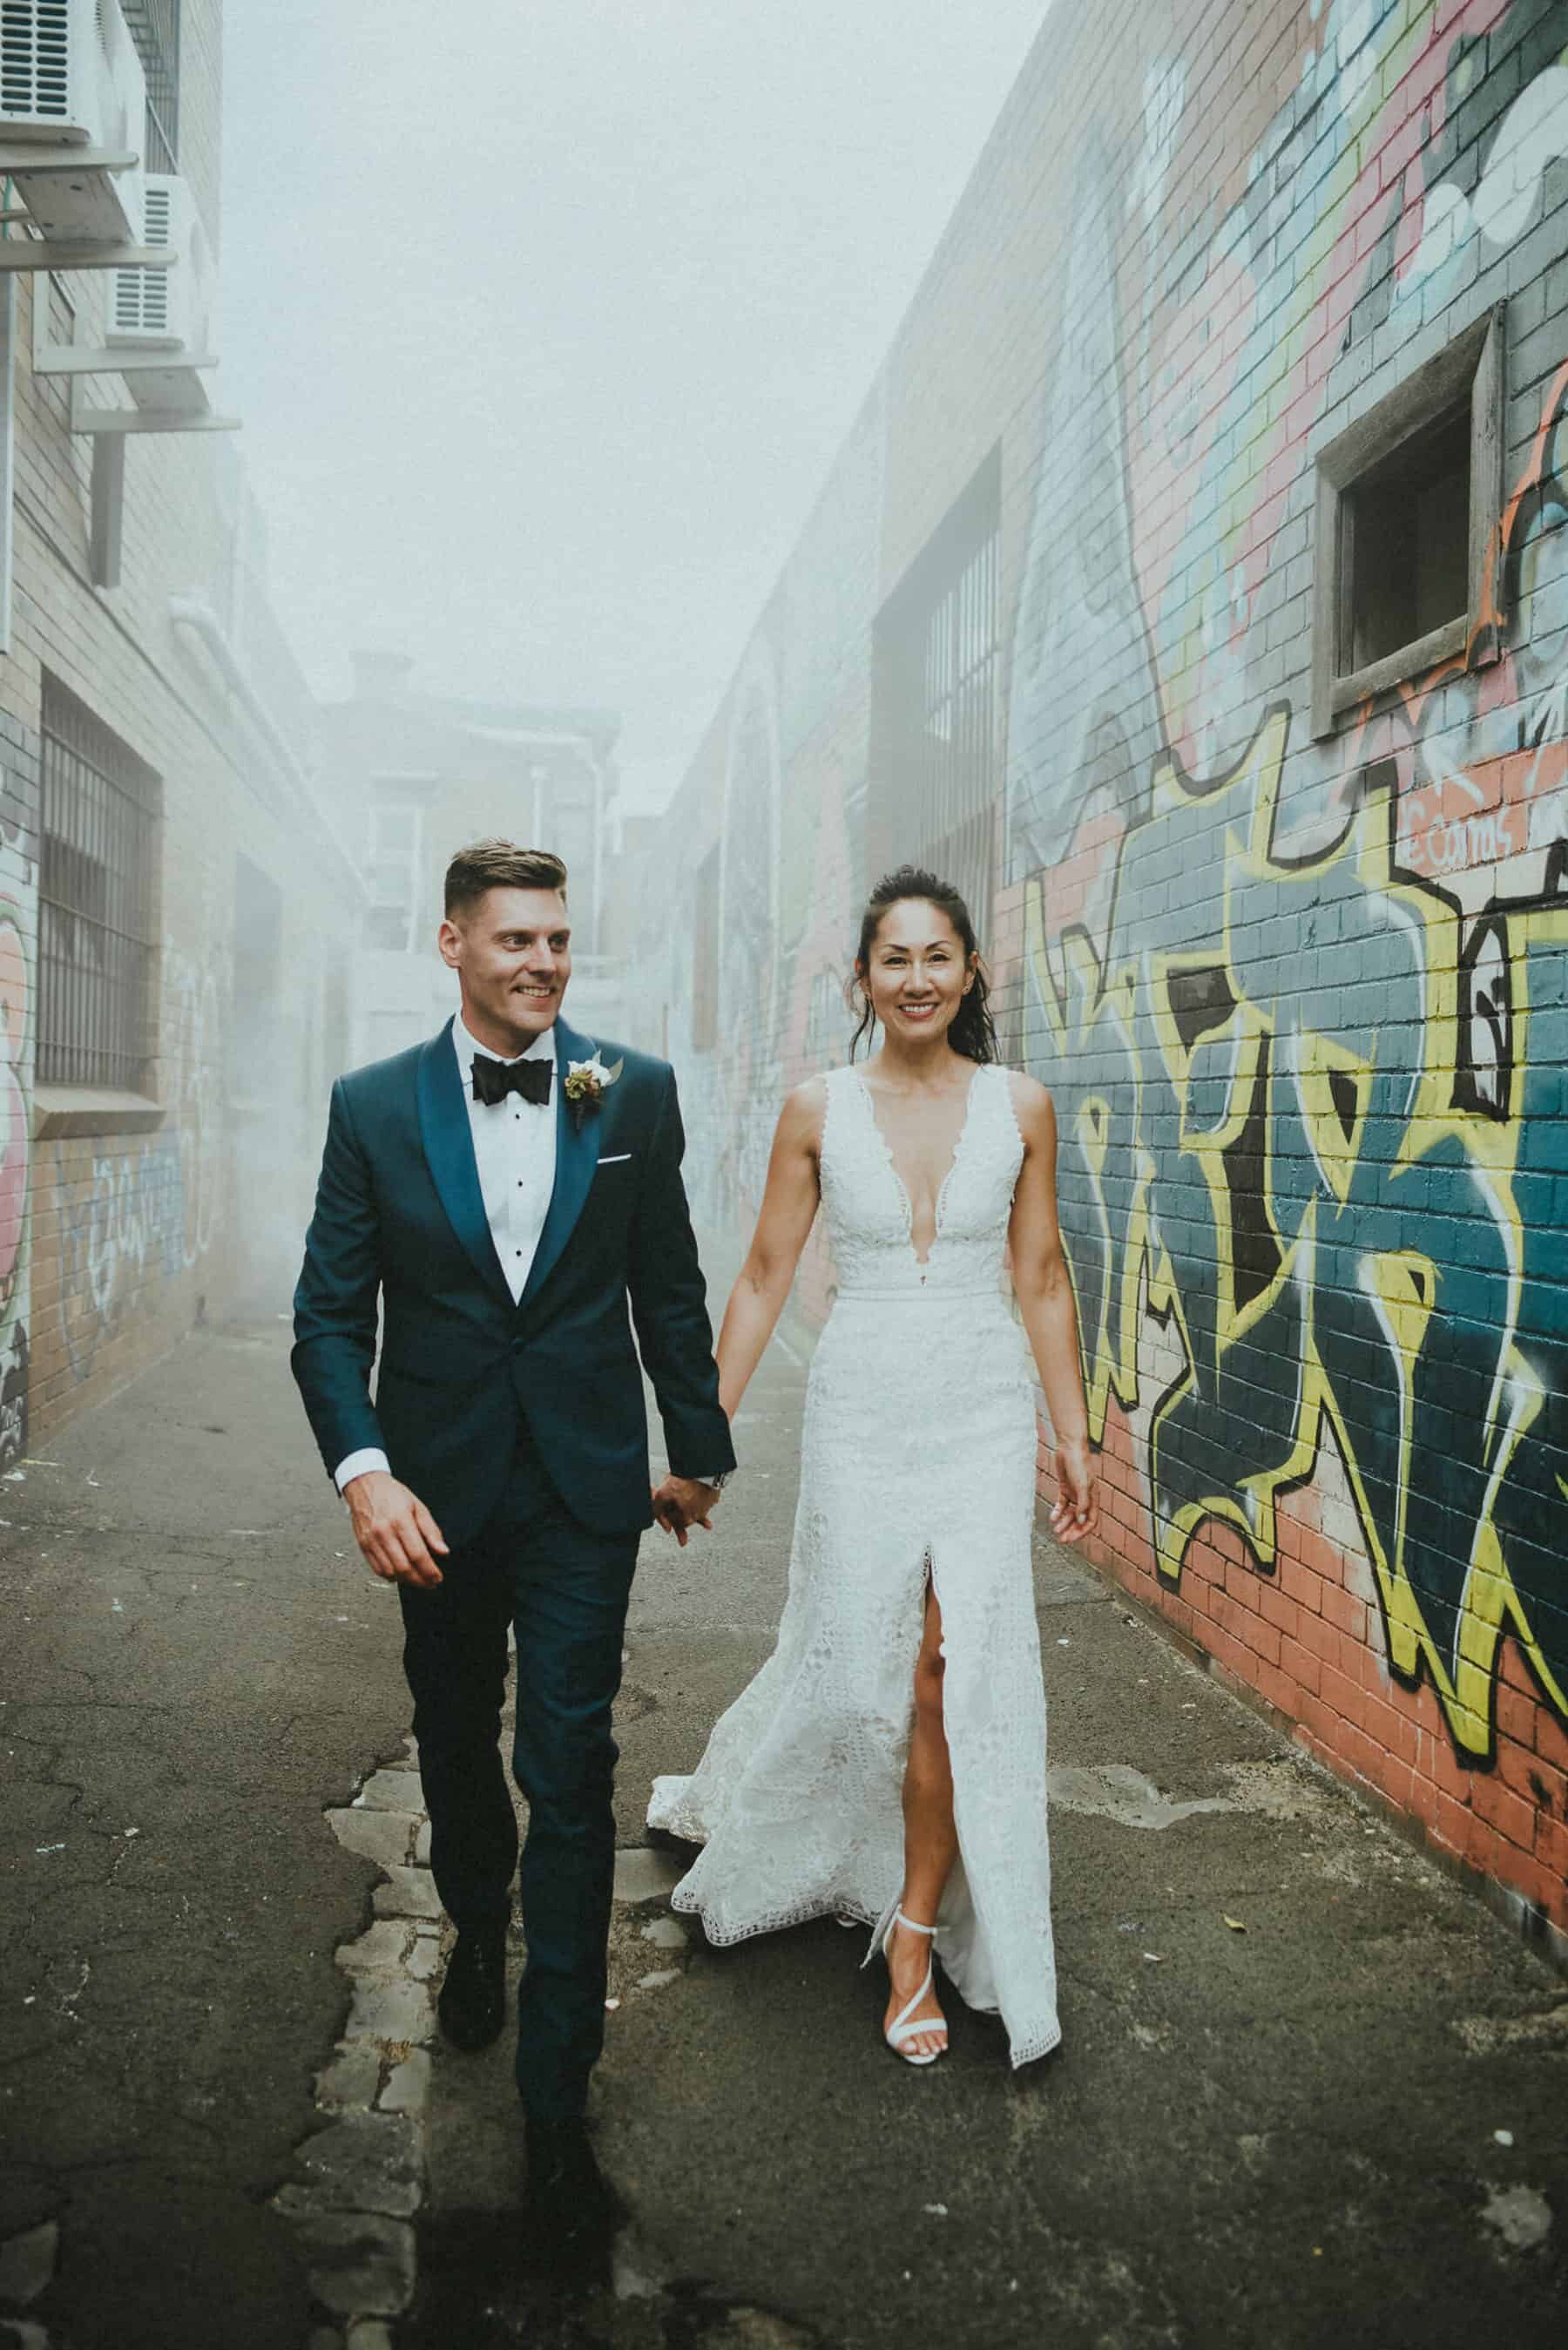 Melbourne laneways wedding with smoke bombs